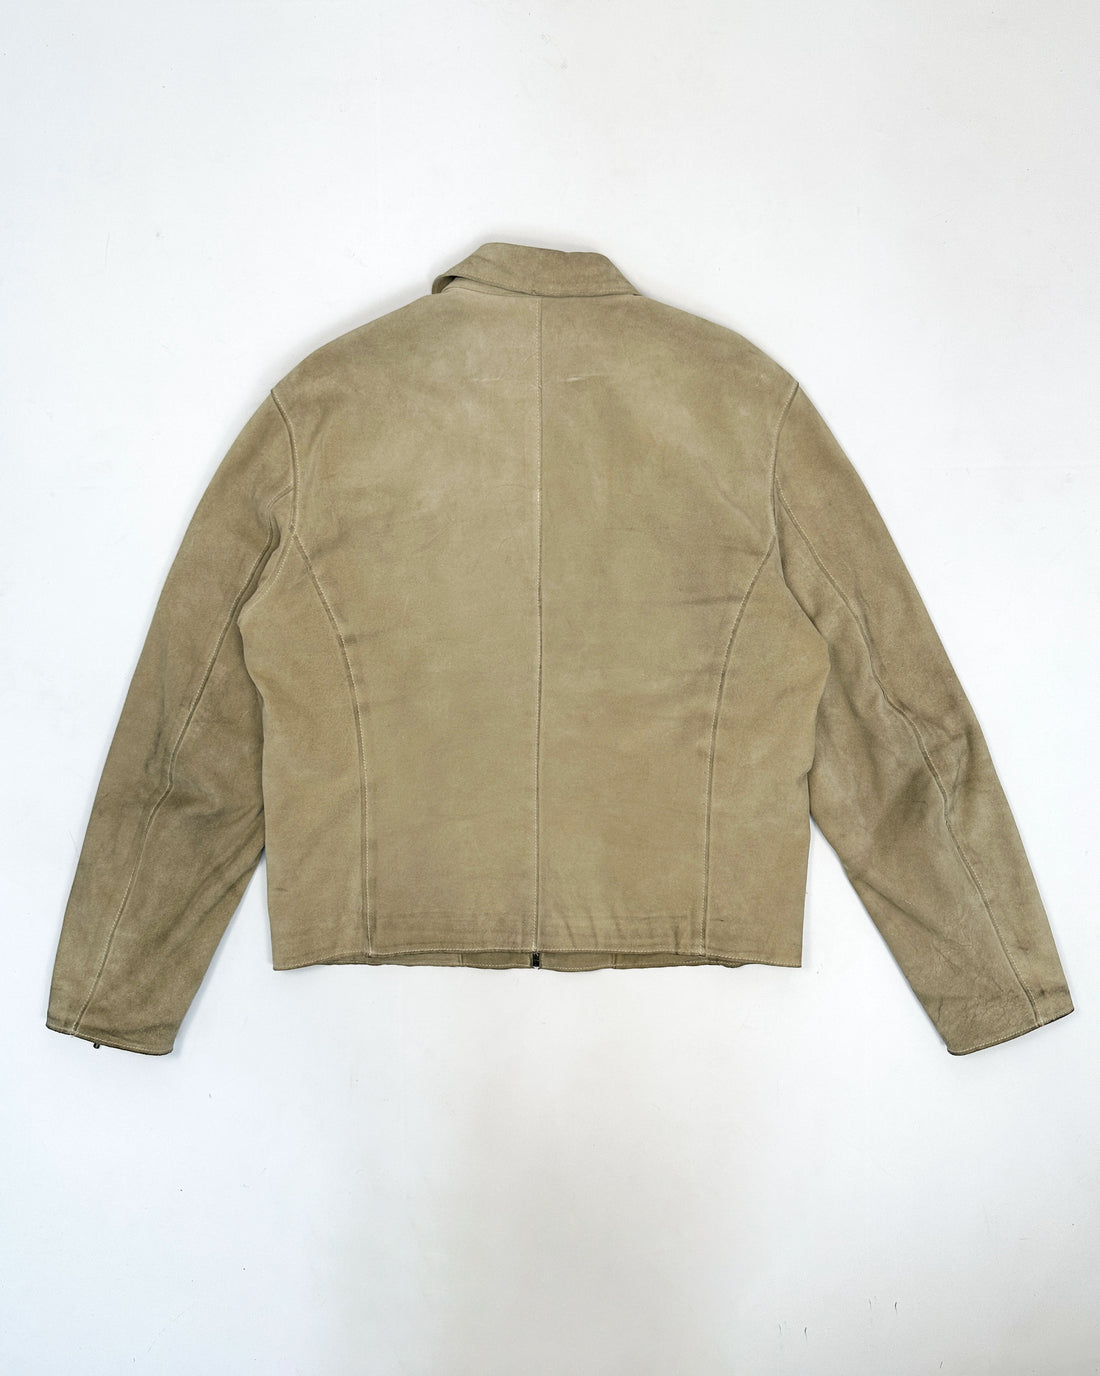 Just Cavalli Beige Suede Zipped Jacket 1990's